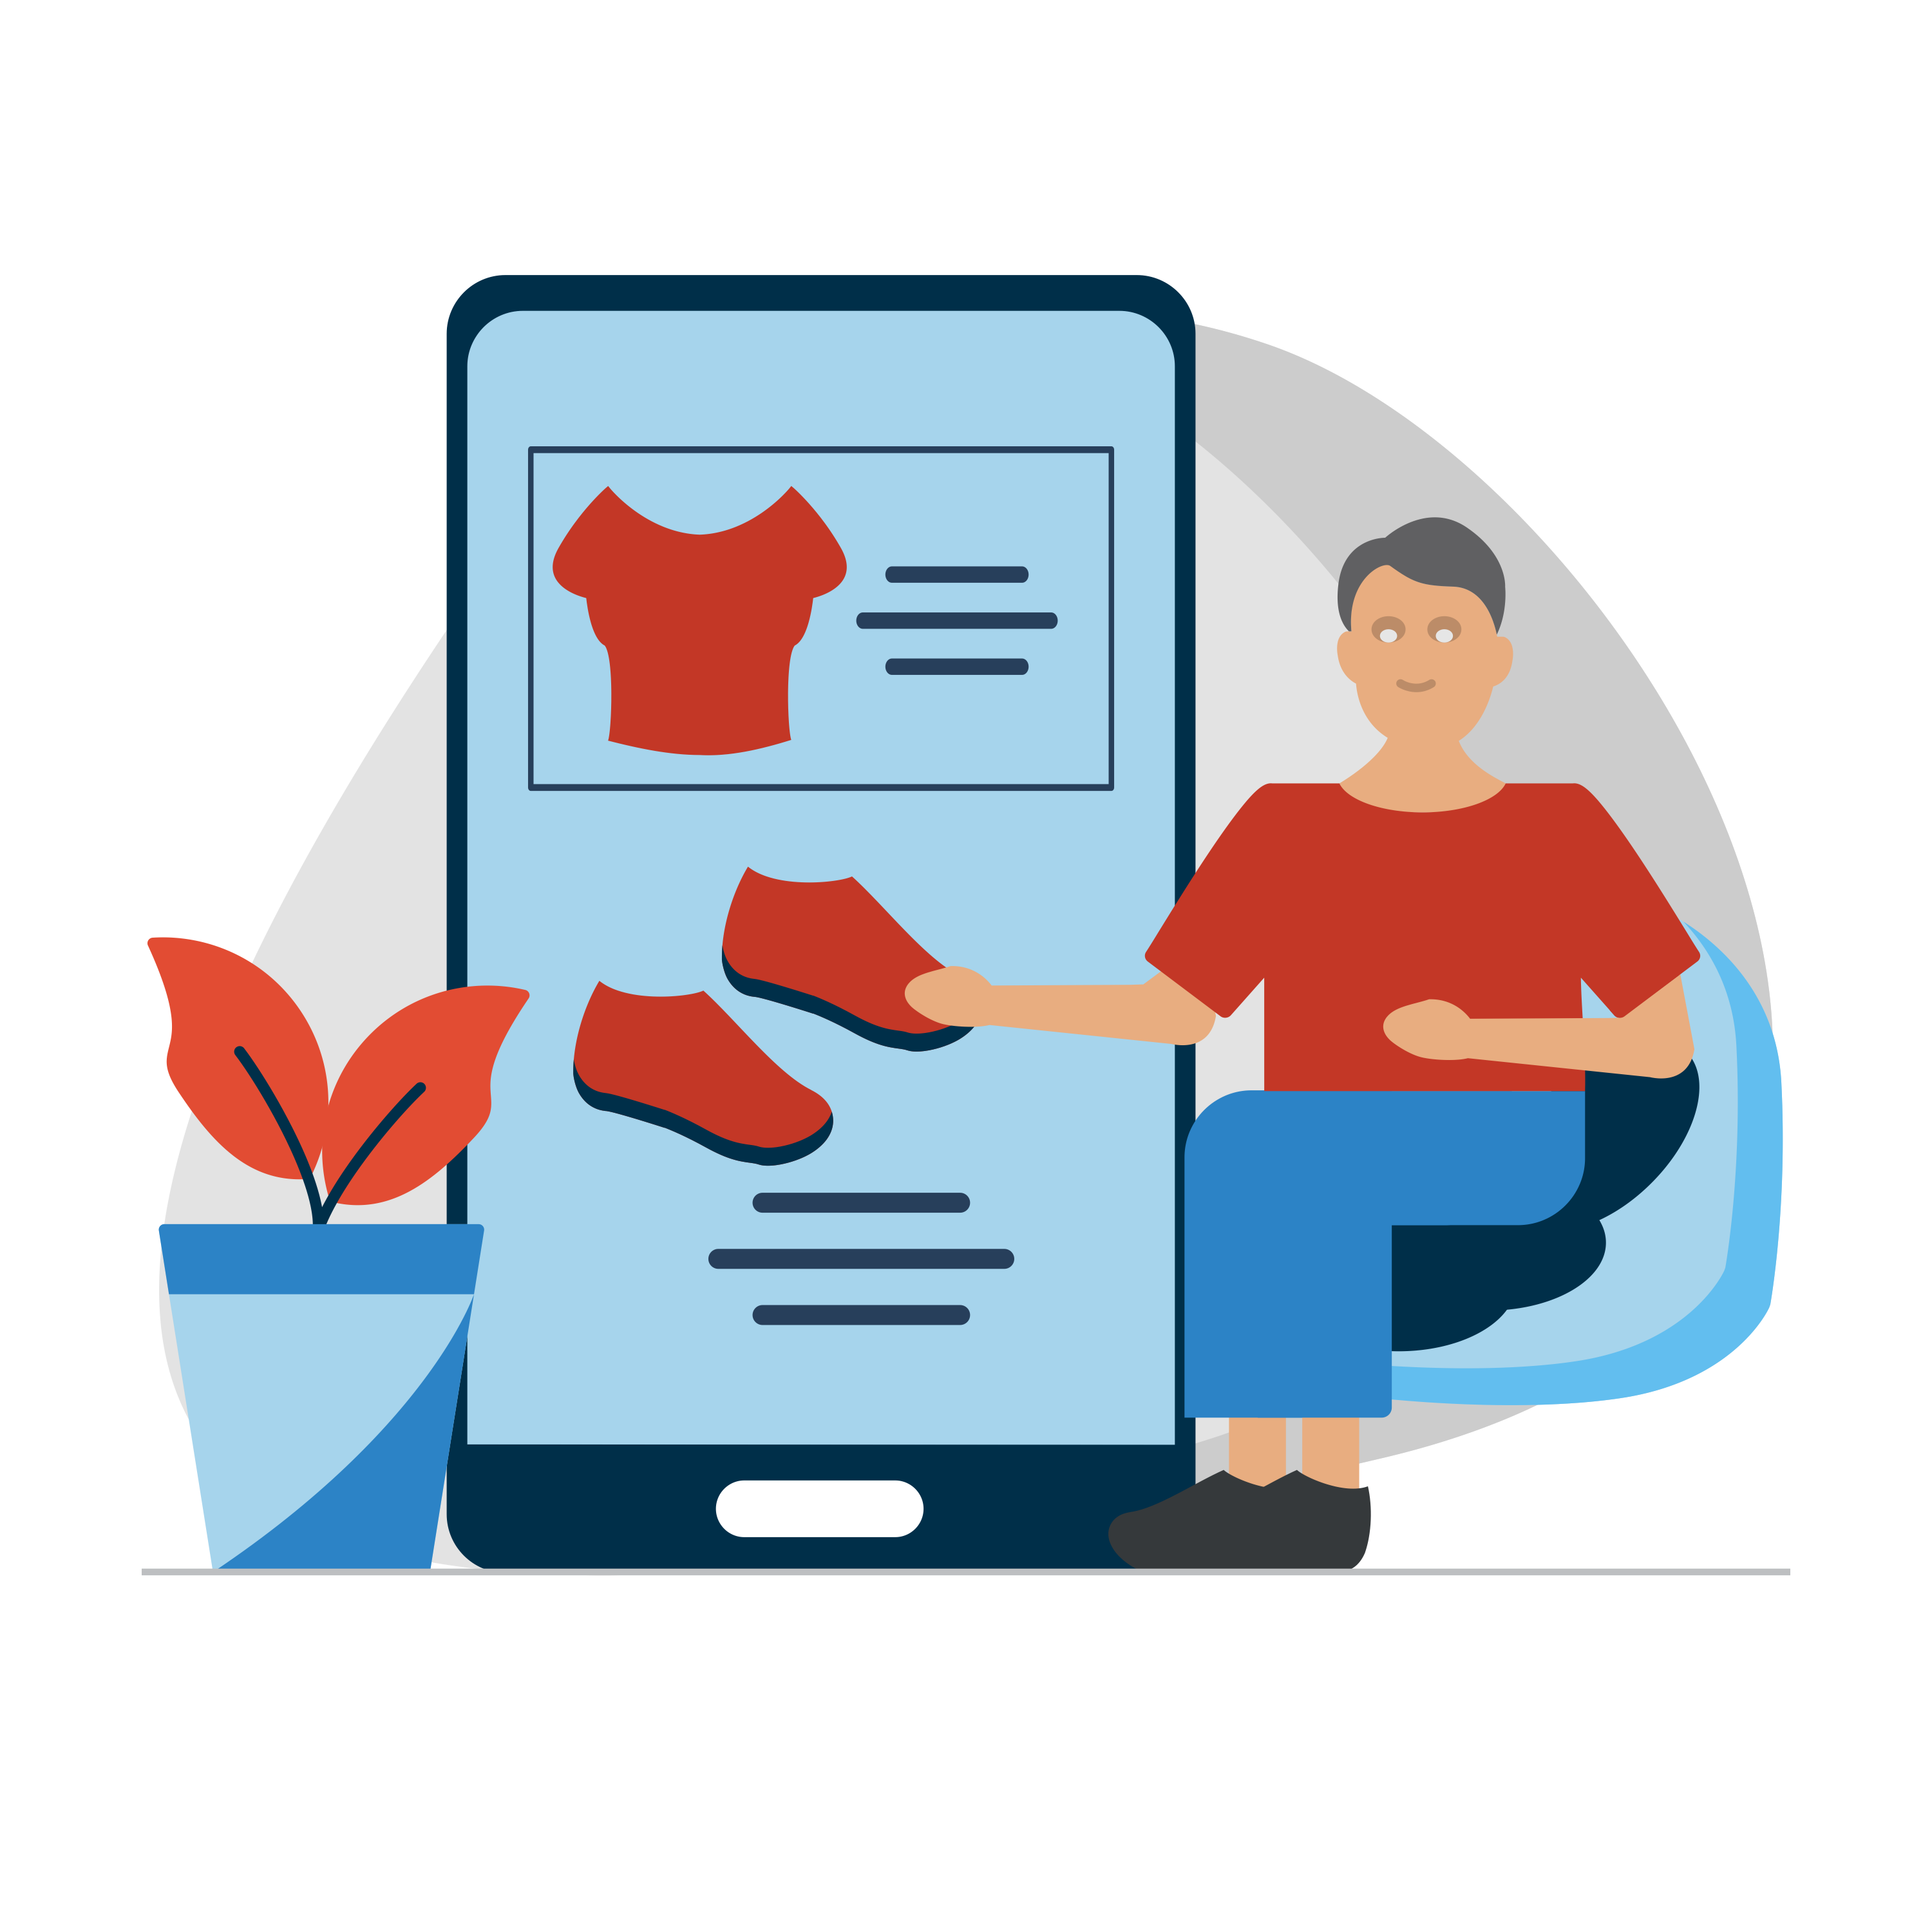 illustration-customer-commerce-mobile-purchase-store-marketing-sale-phone-online-internet-illustration